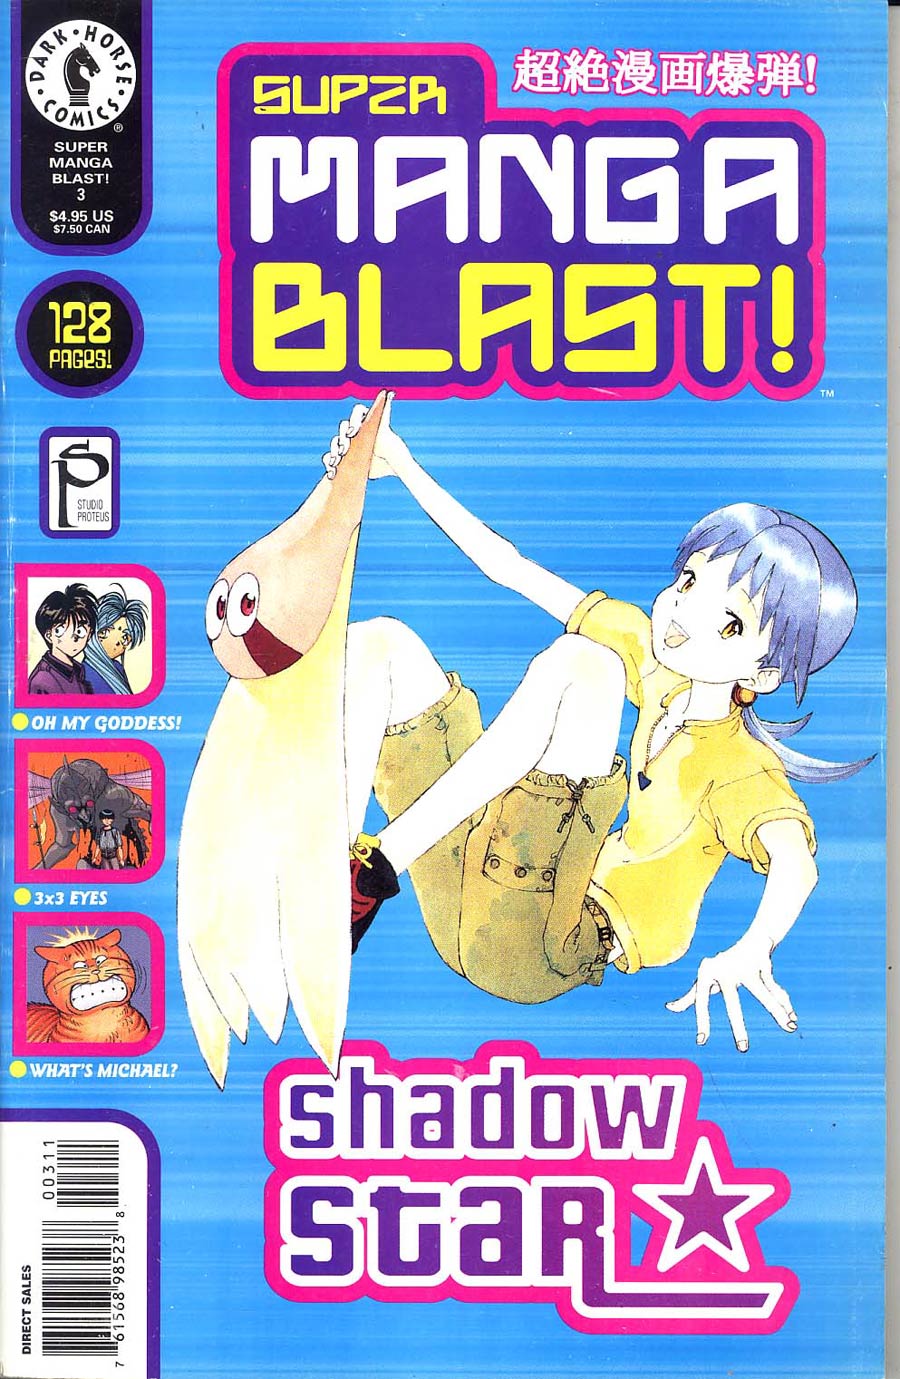 Super Manga Blast #3